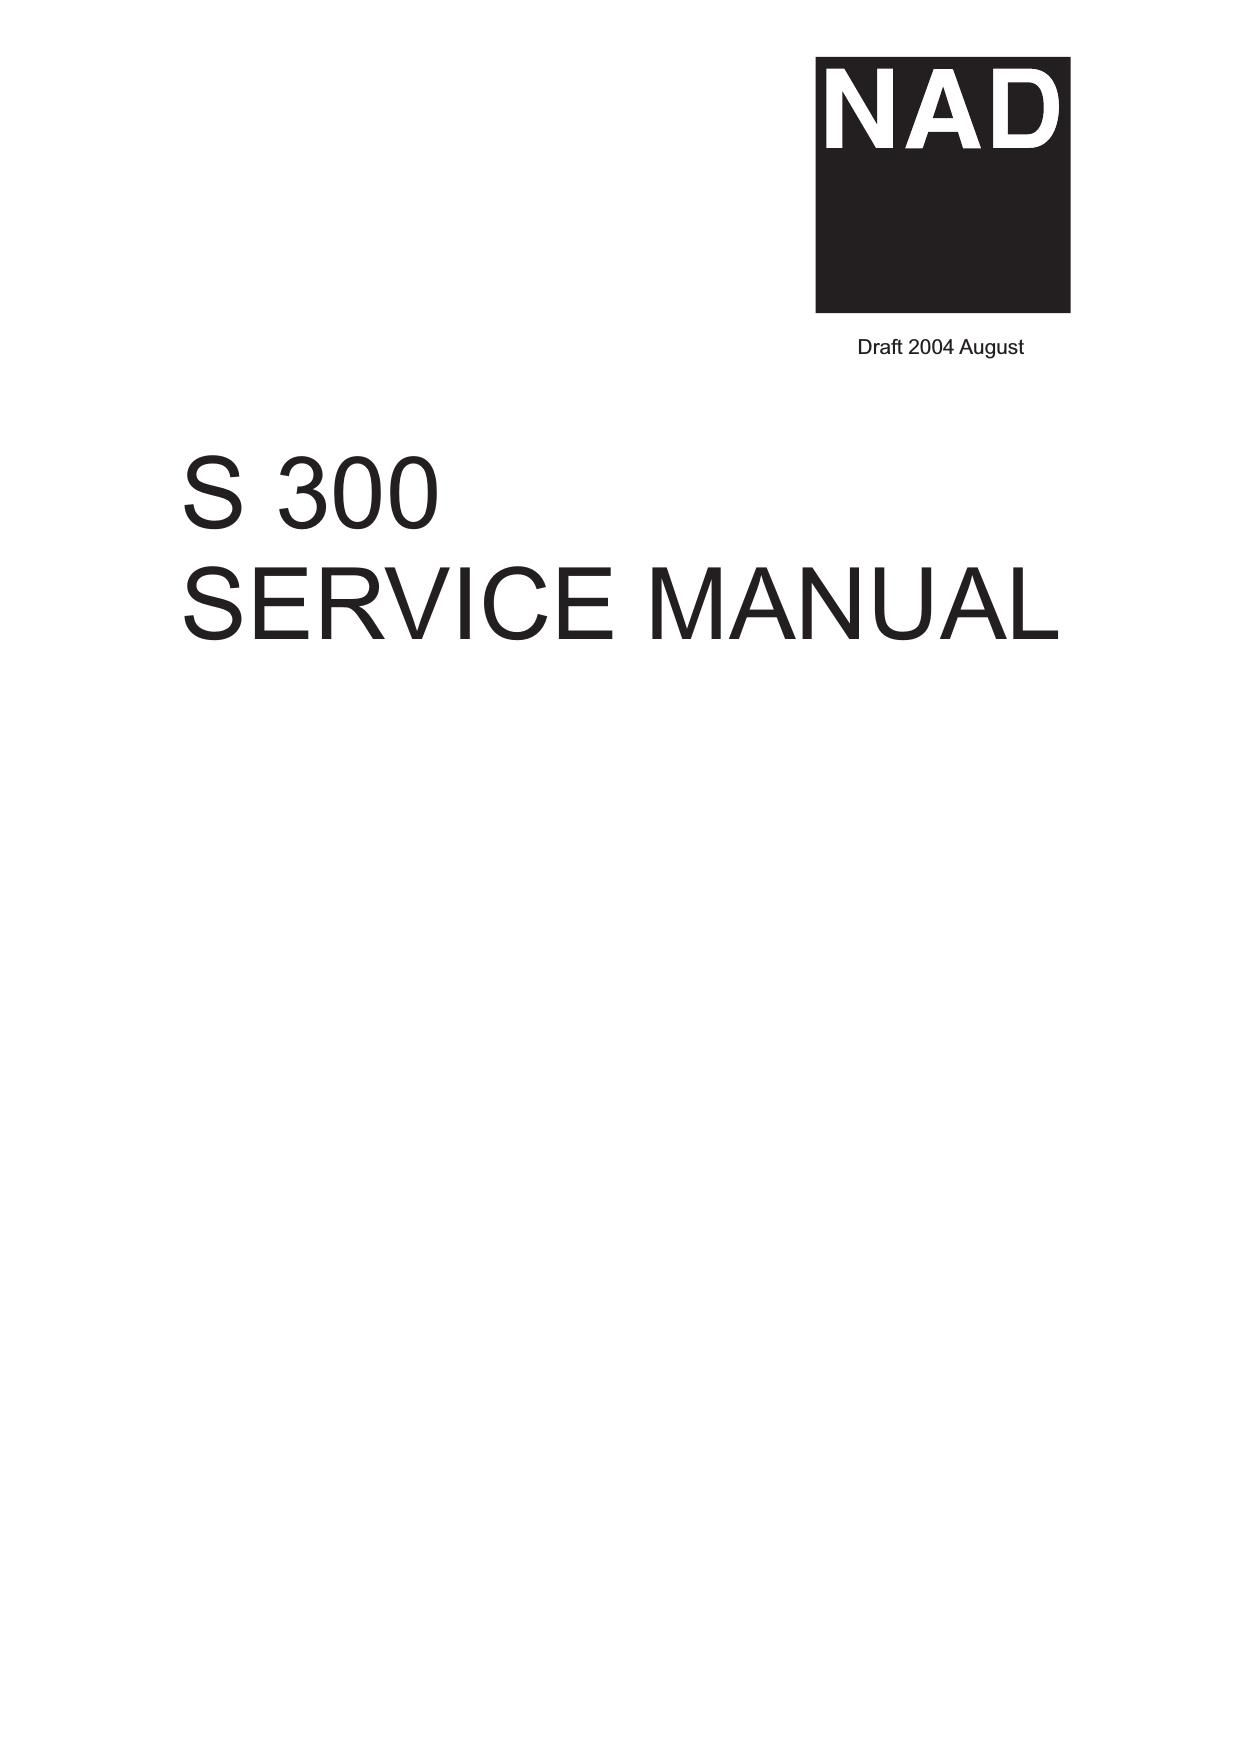 Nad S 300 Service Manual